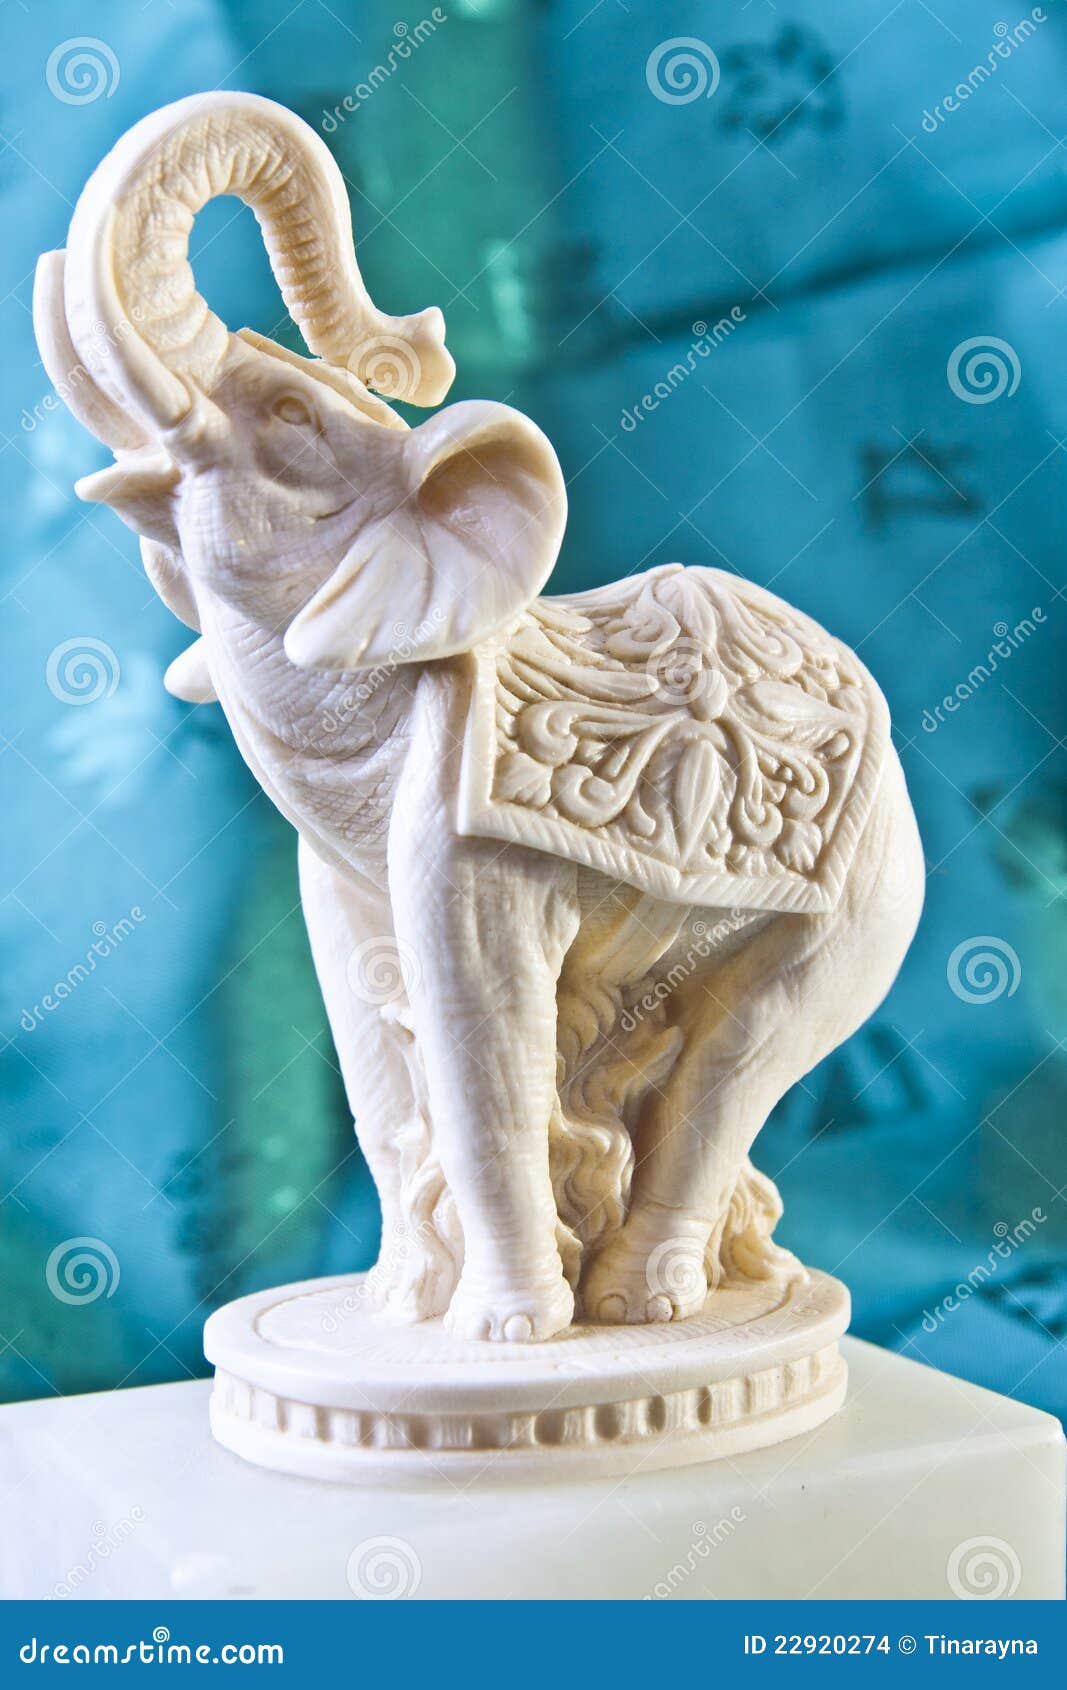 ivory elephant statue